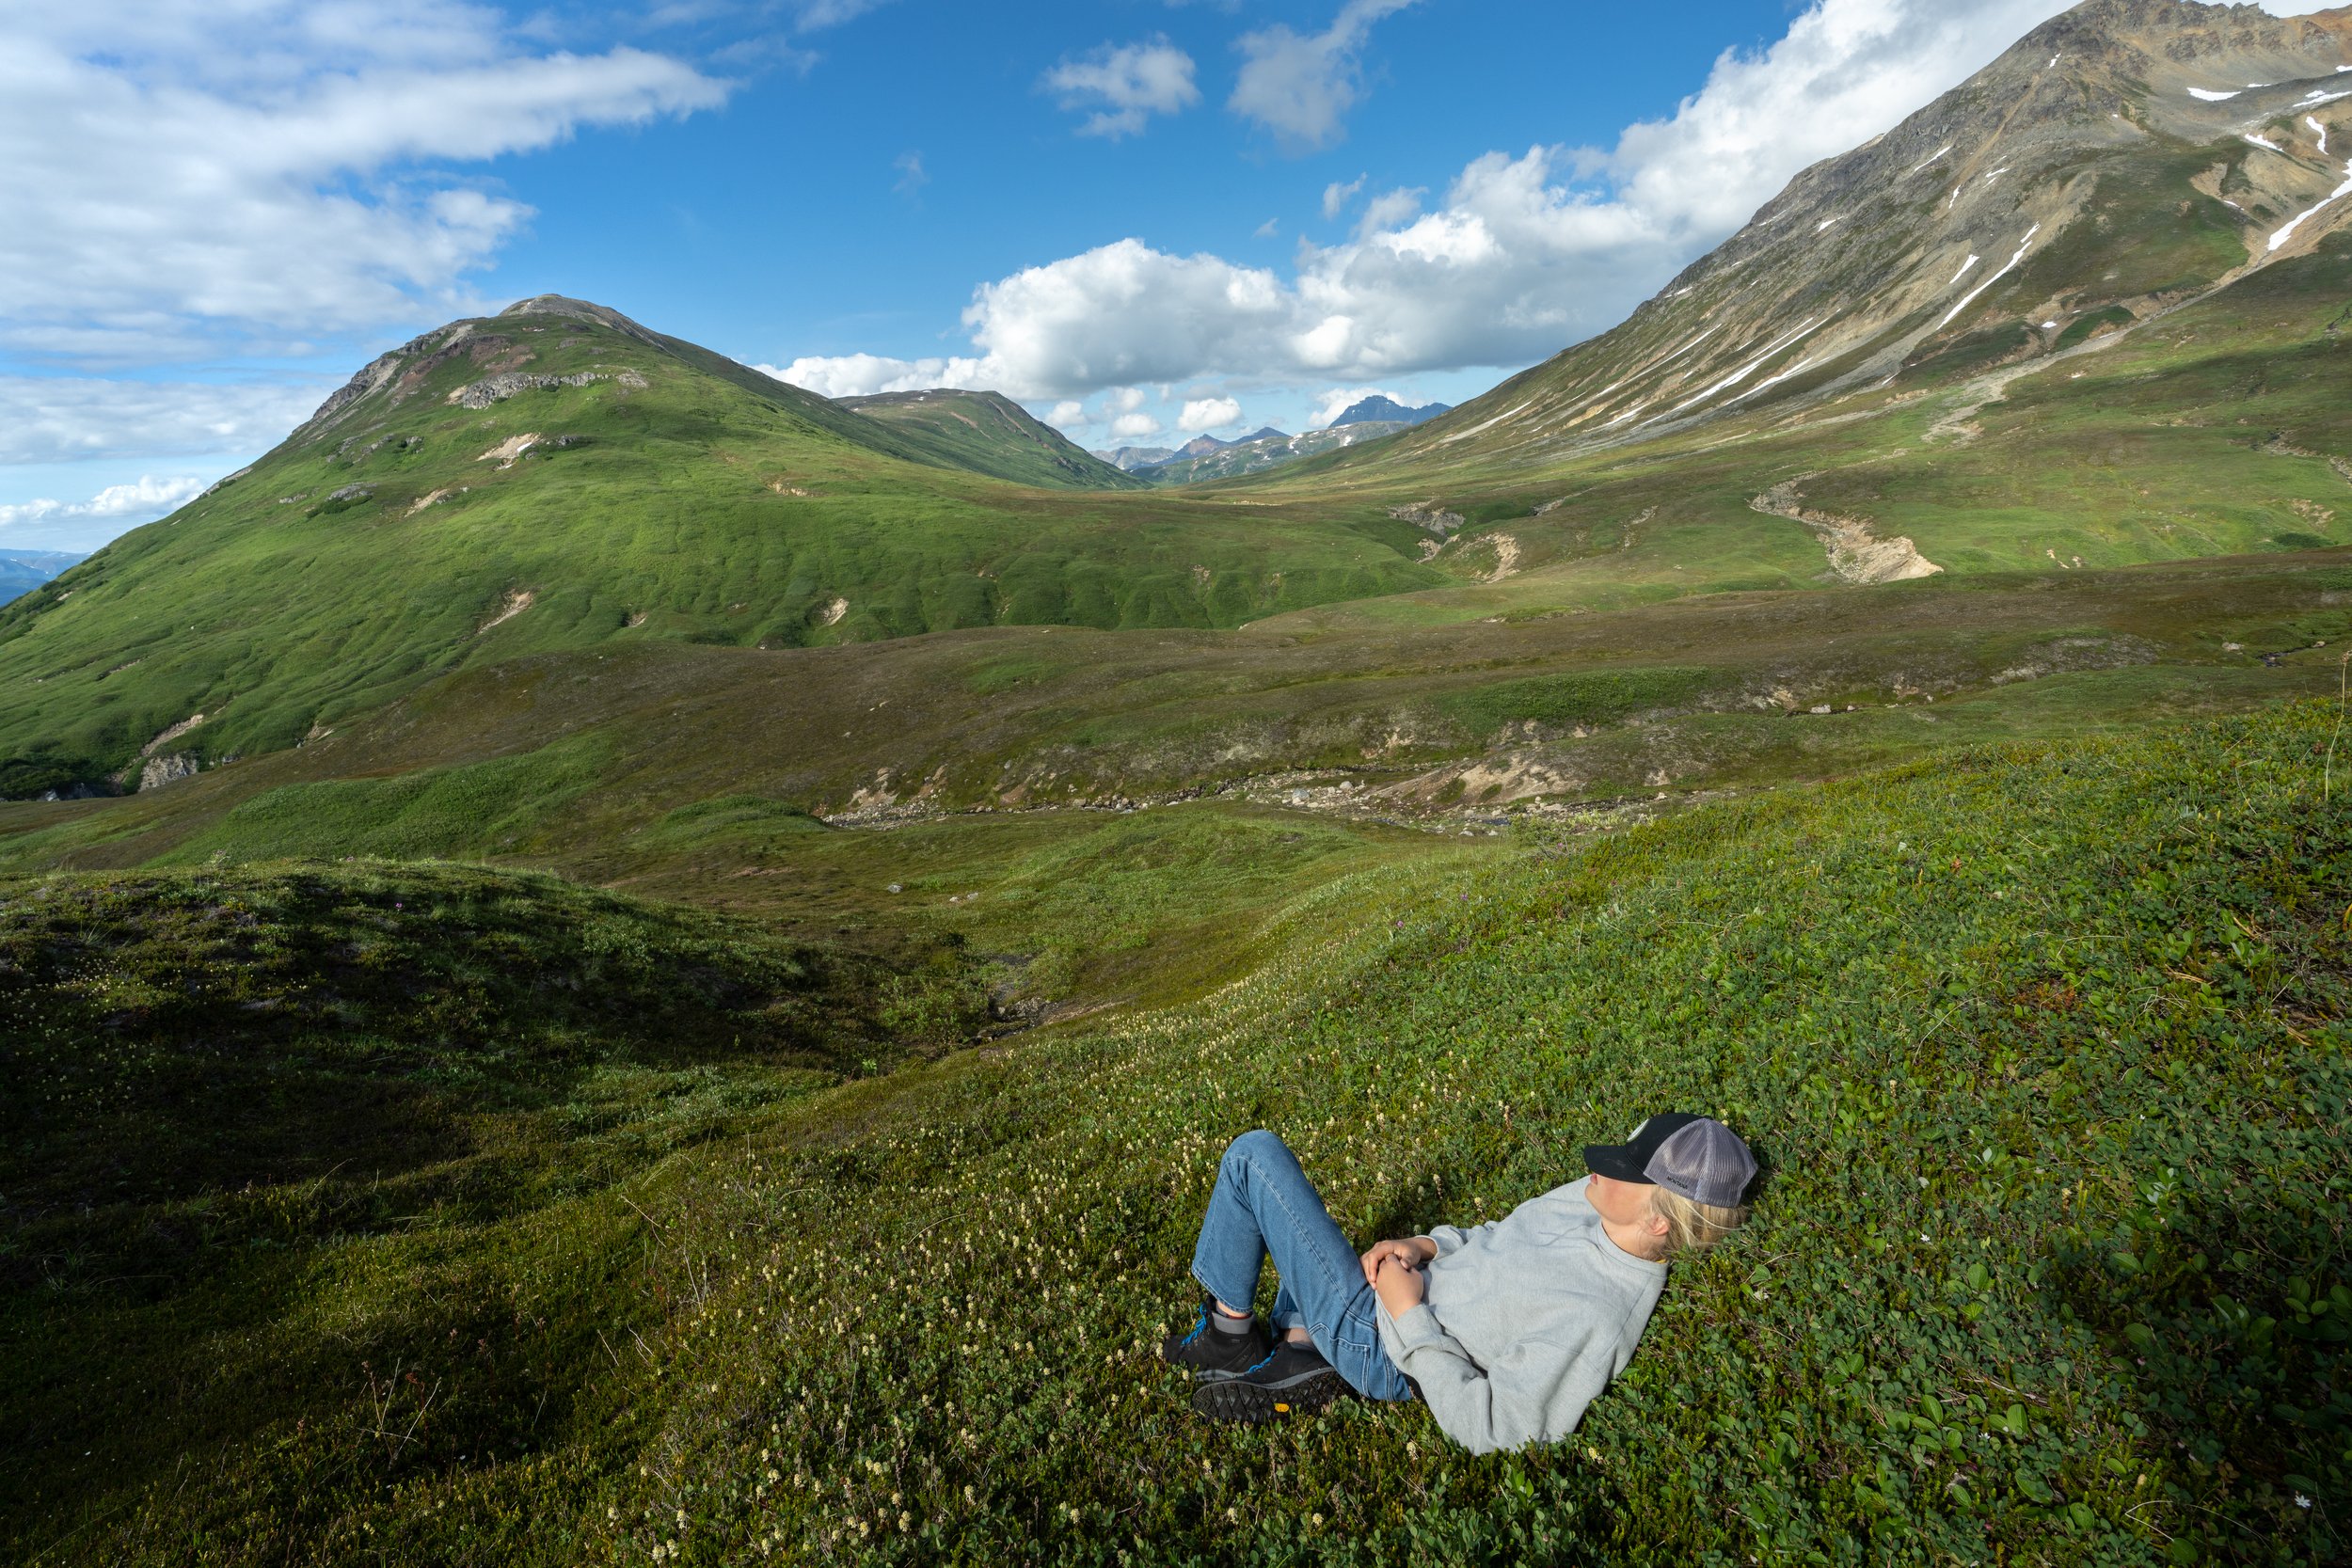   Alaska, 2020  - Relaxing on the tundra in the Tordrillo Mountain Range.  